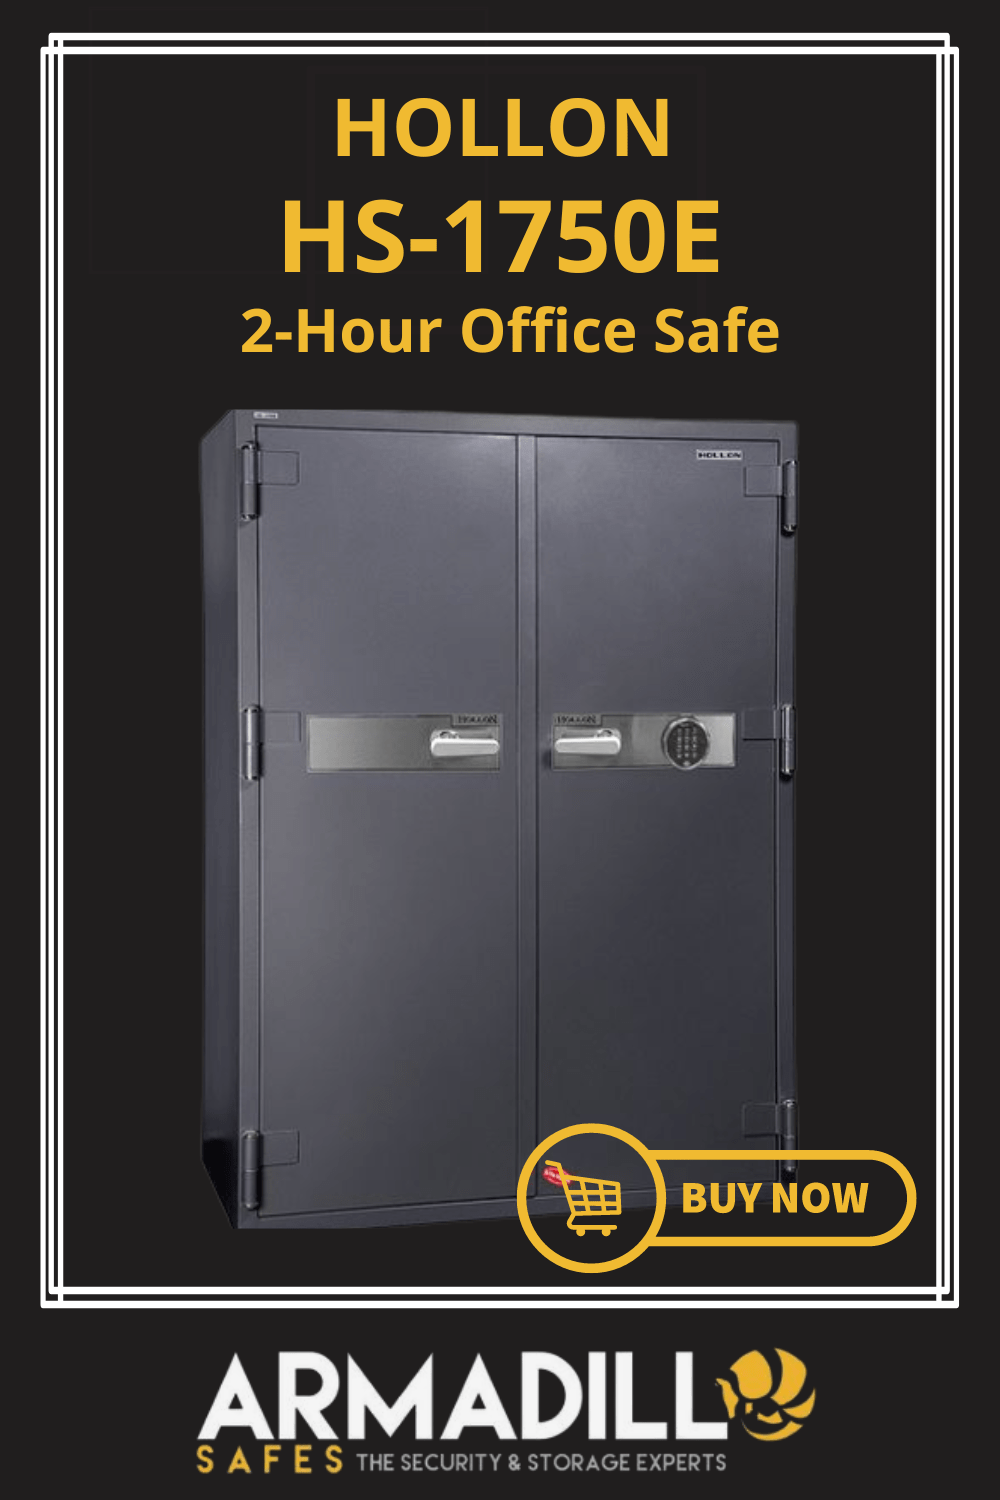 Hollon HS-1750E 2-Hour Office Safe Armadillo Safe and Vault